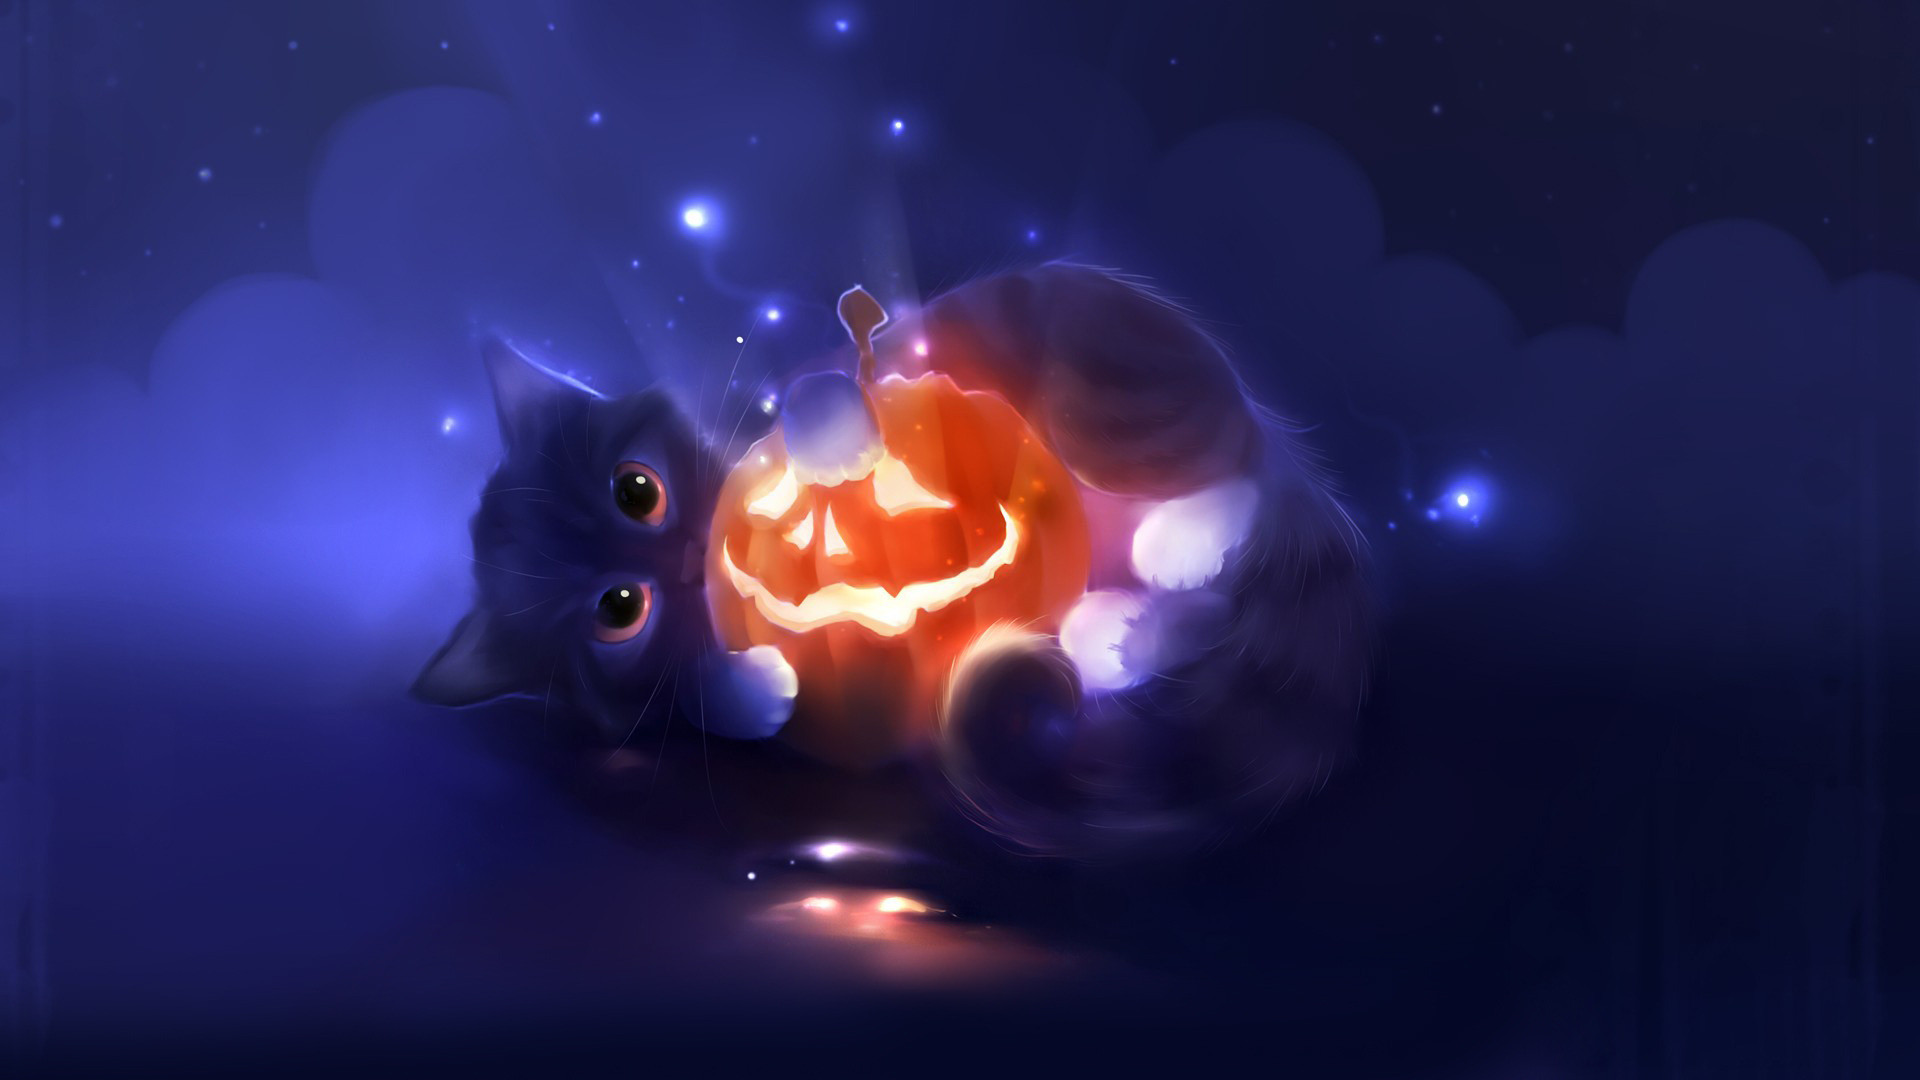 Download wallpaper 1366x768 cat black halloween moon silhouette tablet  laptop hd background